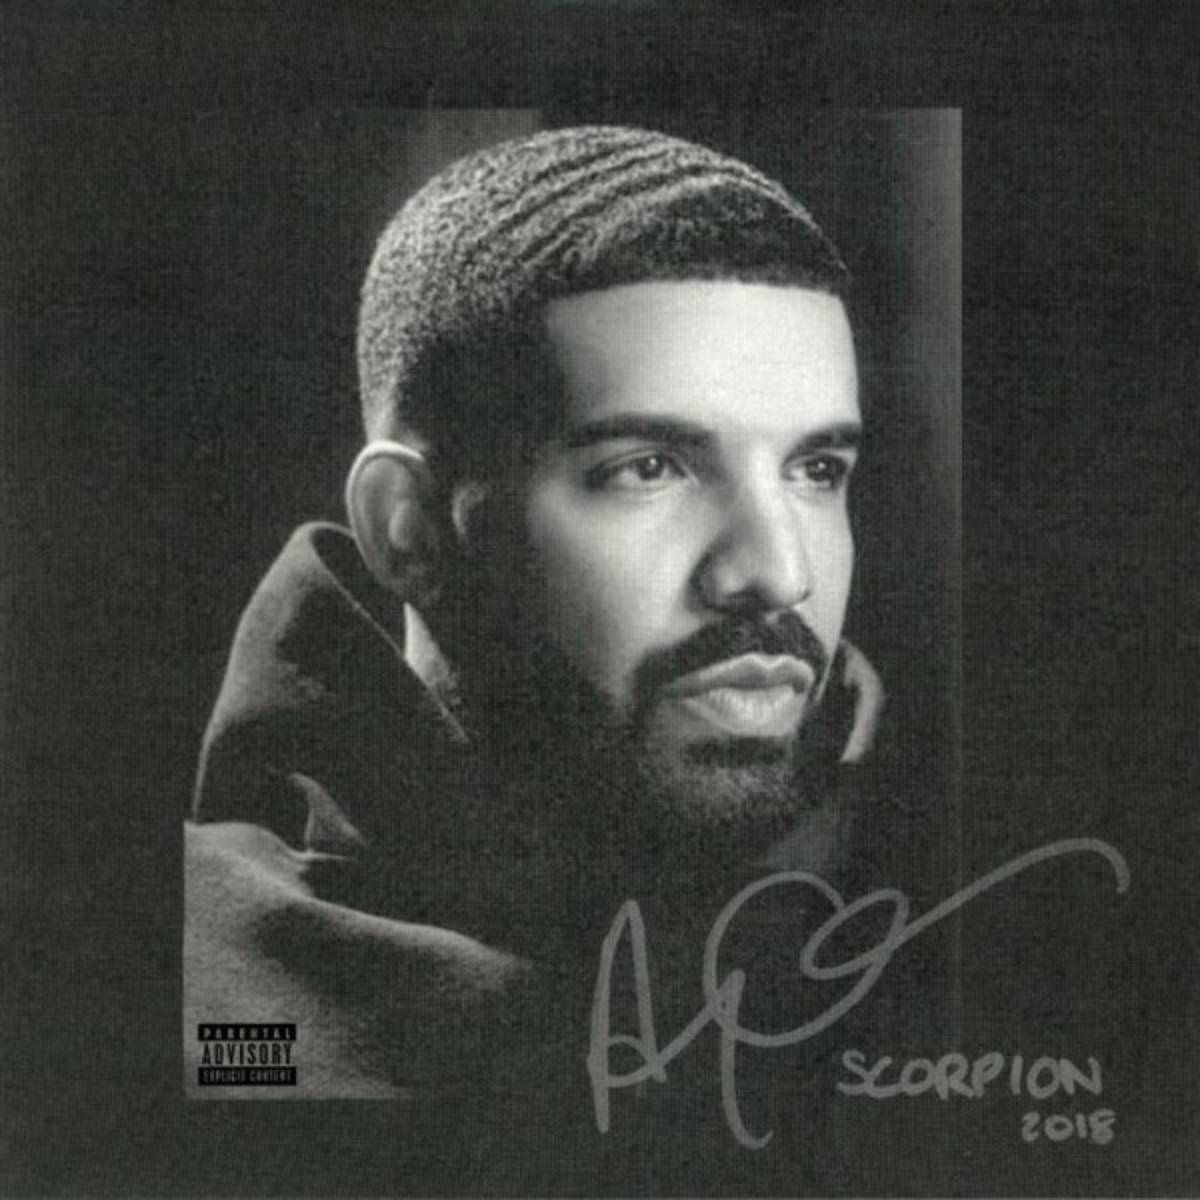 Scorpion (álbum doble del artista canadiense Drake)